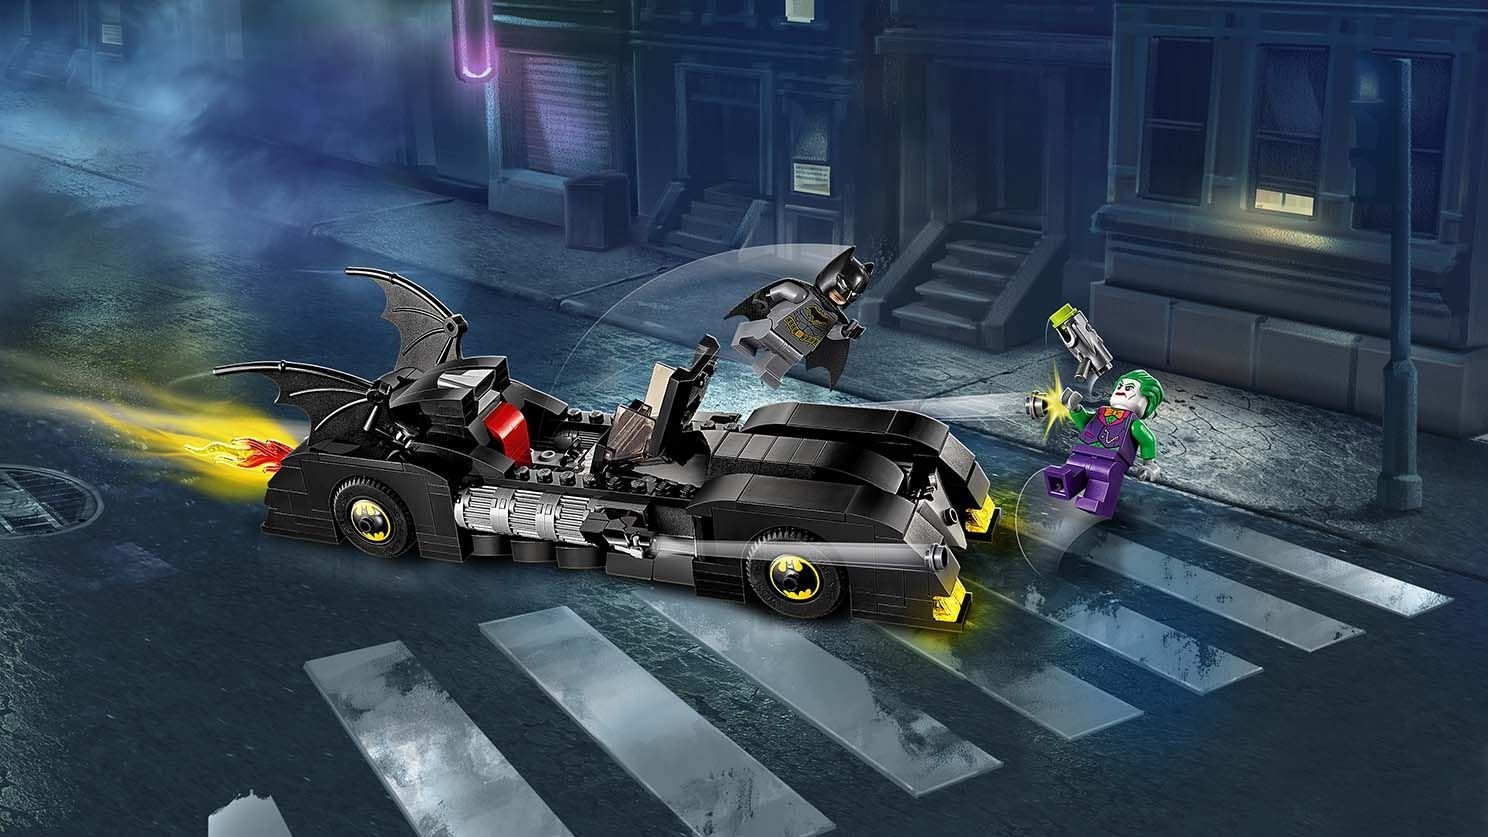 LEGO Super Heroes 76119 Batmobile™: Verfolgungsjagd mit dem Joker™ LEGO_76119_WEB_SEC01_1488.jpg